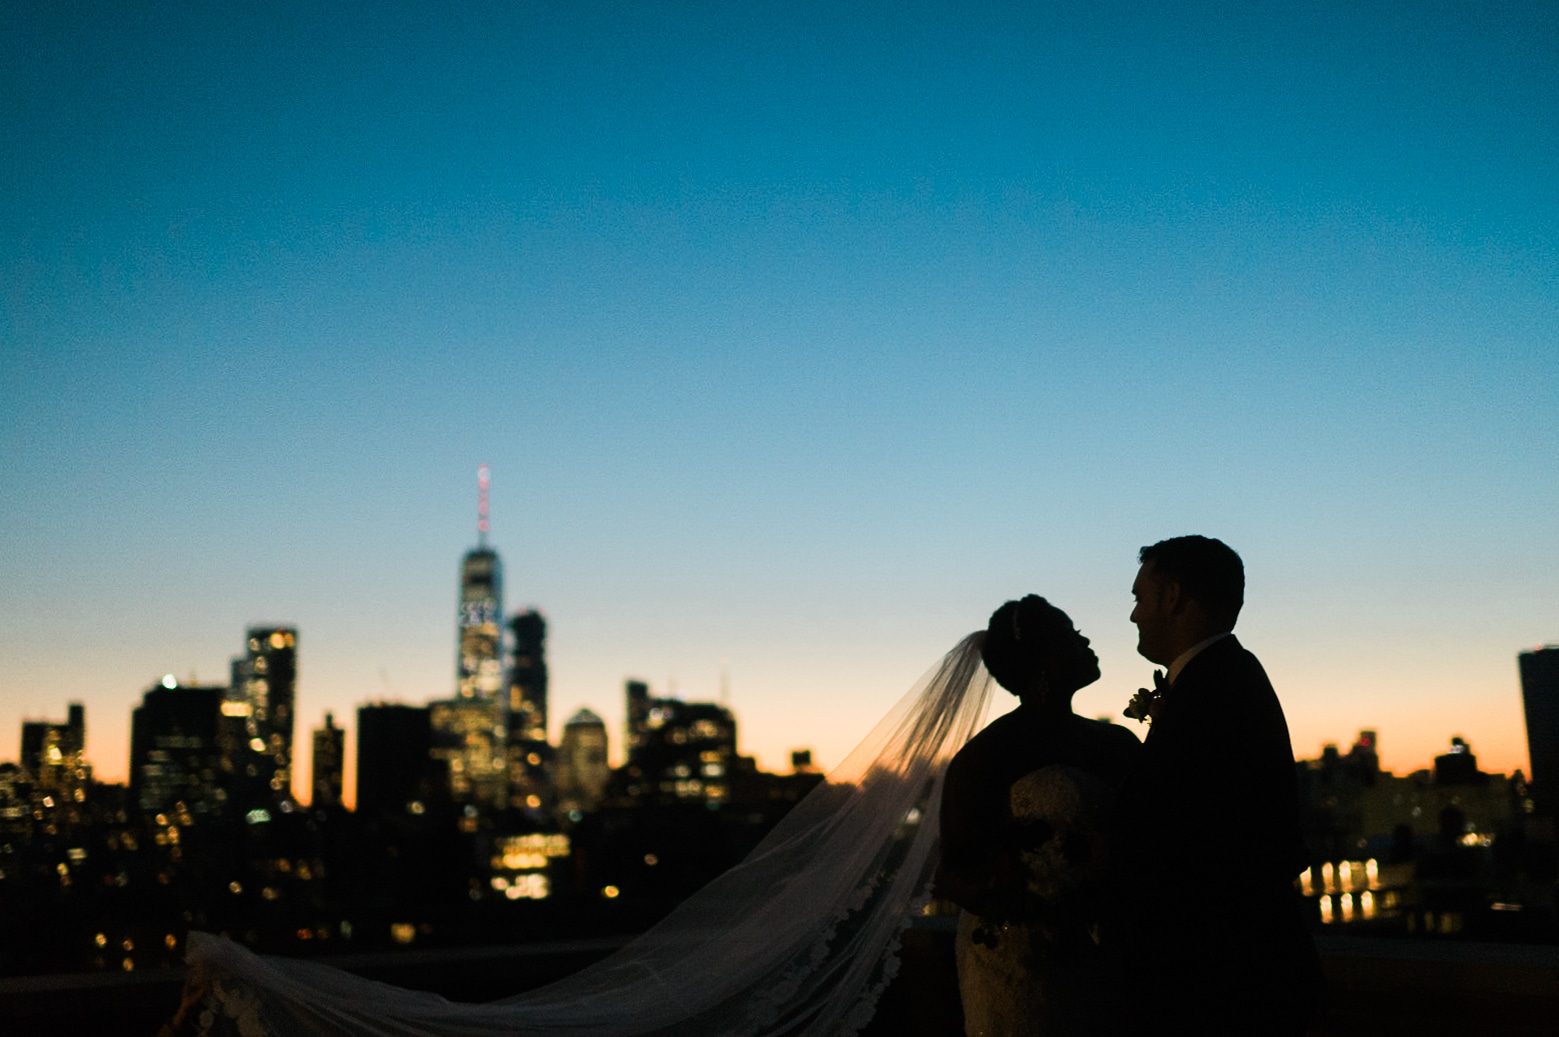 Bowery Hotel wedding in NYC, captured by fun, candid, documentary NYC wedding photographer Ben Lau.